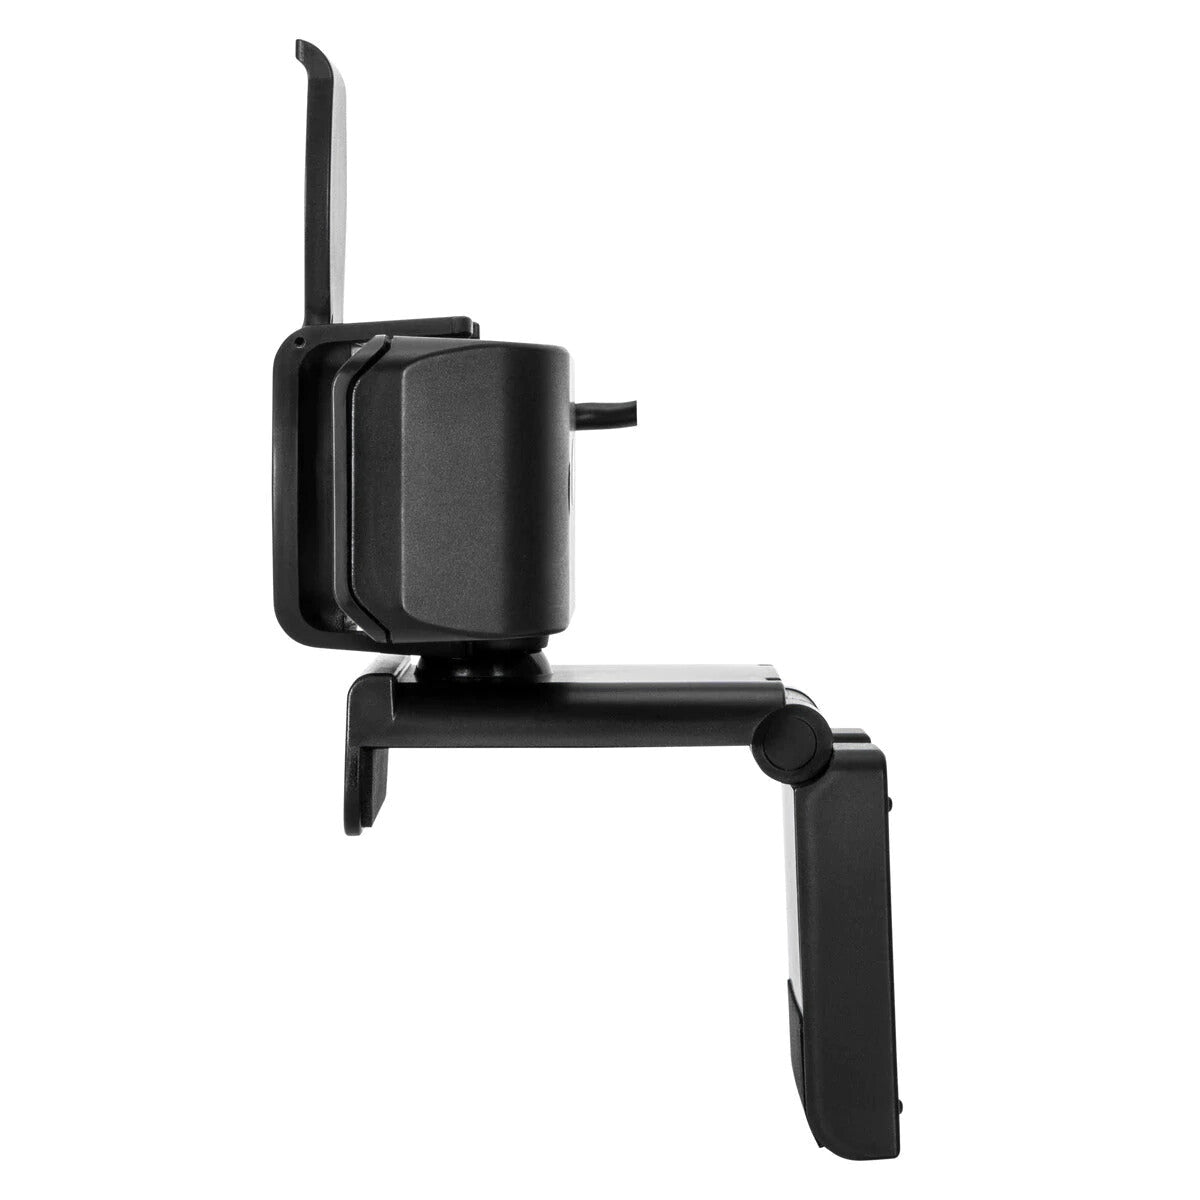 Targus AVC041GL - 2 MP 1920 x 1080 pixels USB 2.0 webcam in Black